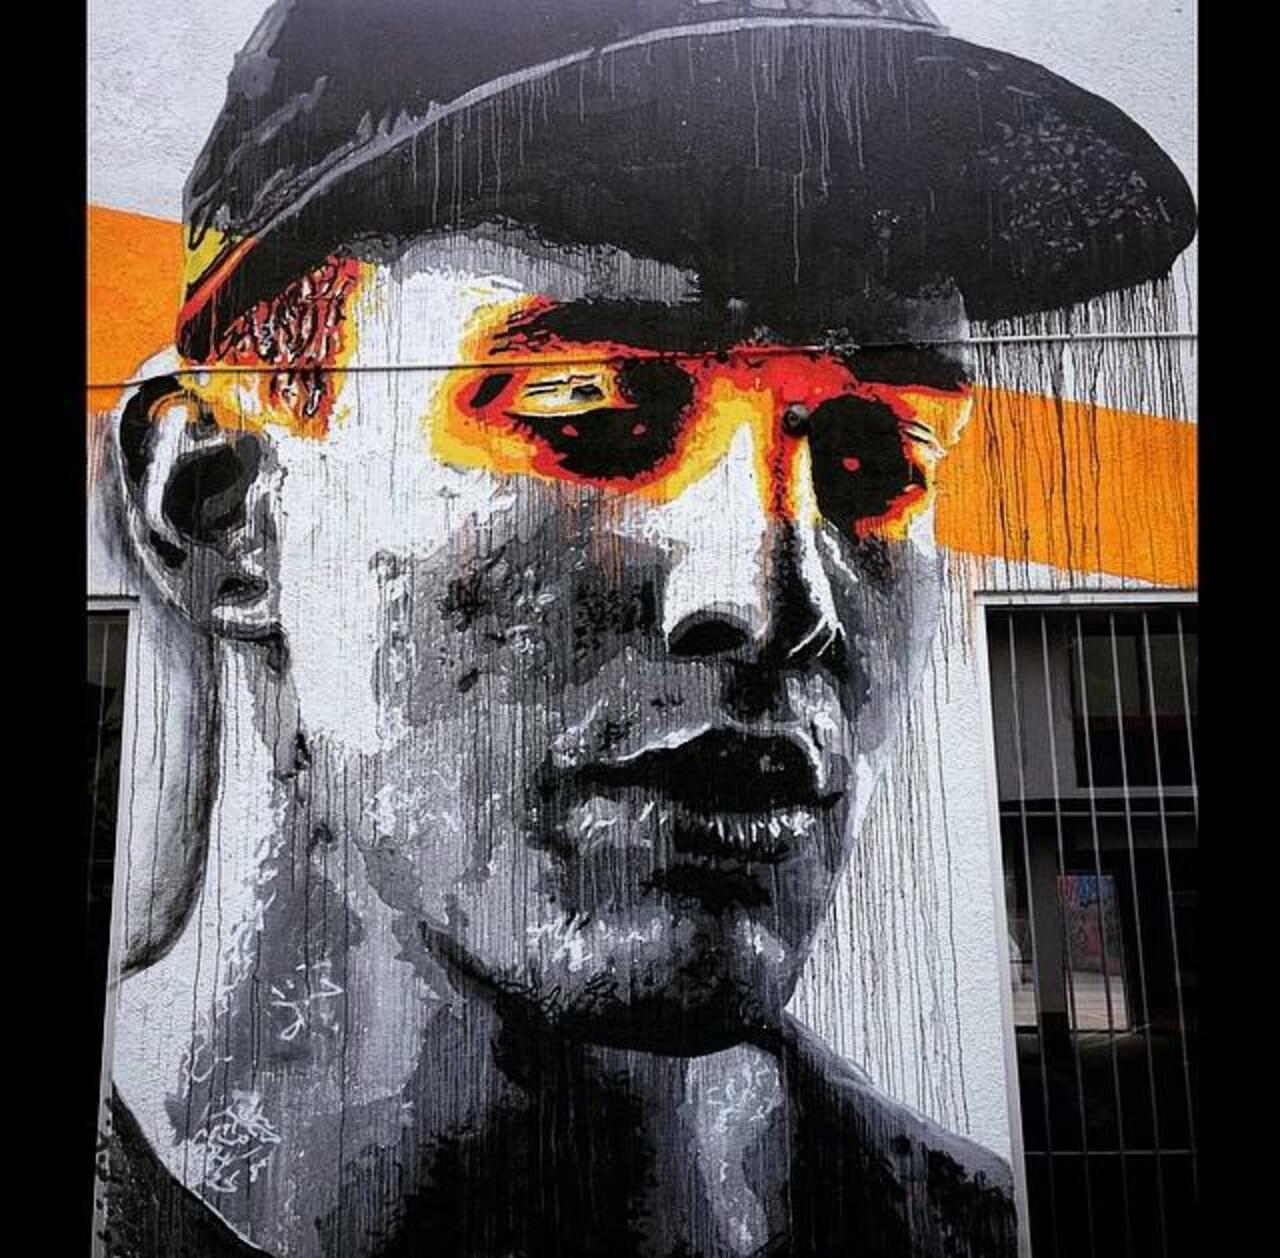 Artist Nils Westergard Street Art portrait in Miami 

#art #graffiti #mural #streetart http://t.co/wCQXBsSG7q